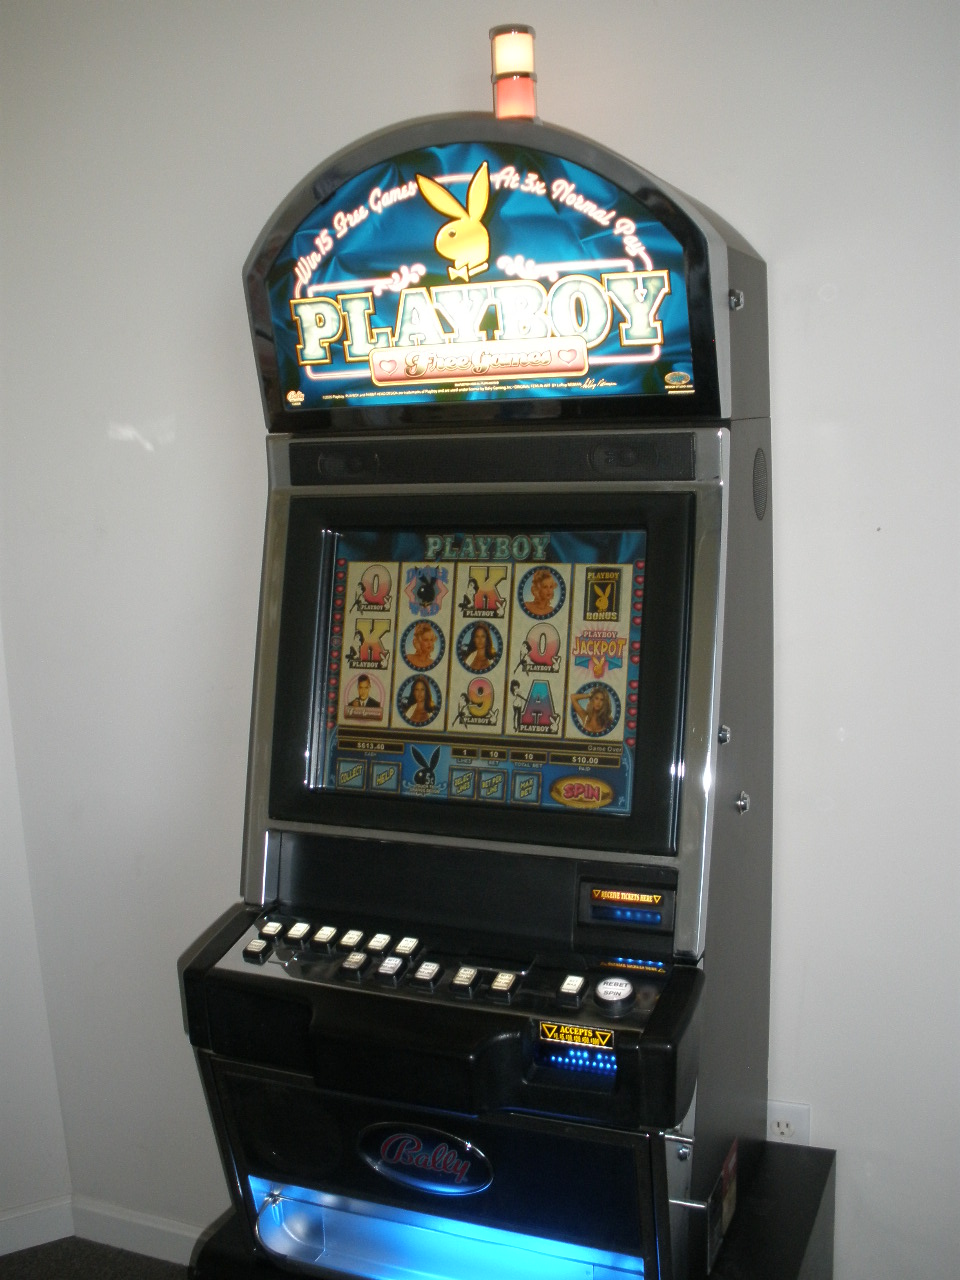 Bally Playboy Free Games M9000 Video Slot Machine For Sale • Gambler's ...